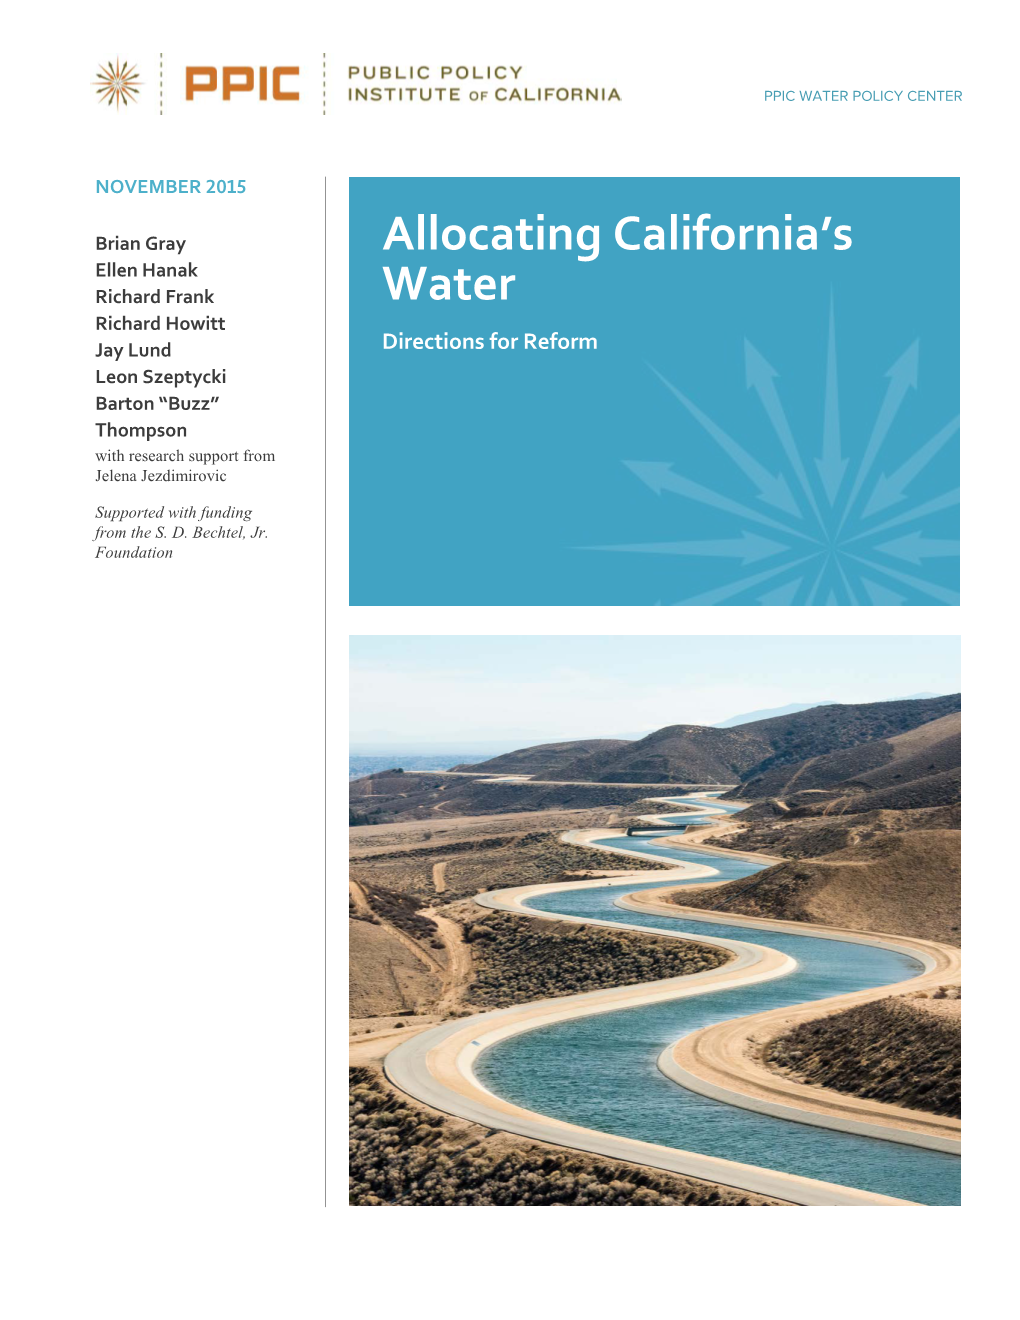 Allocating California's Water